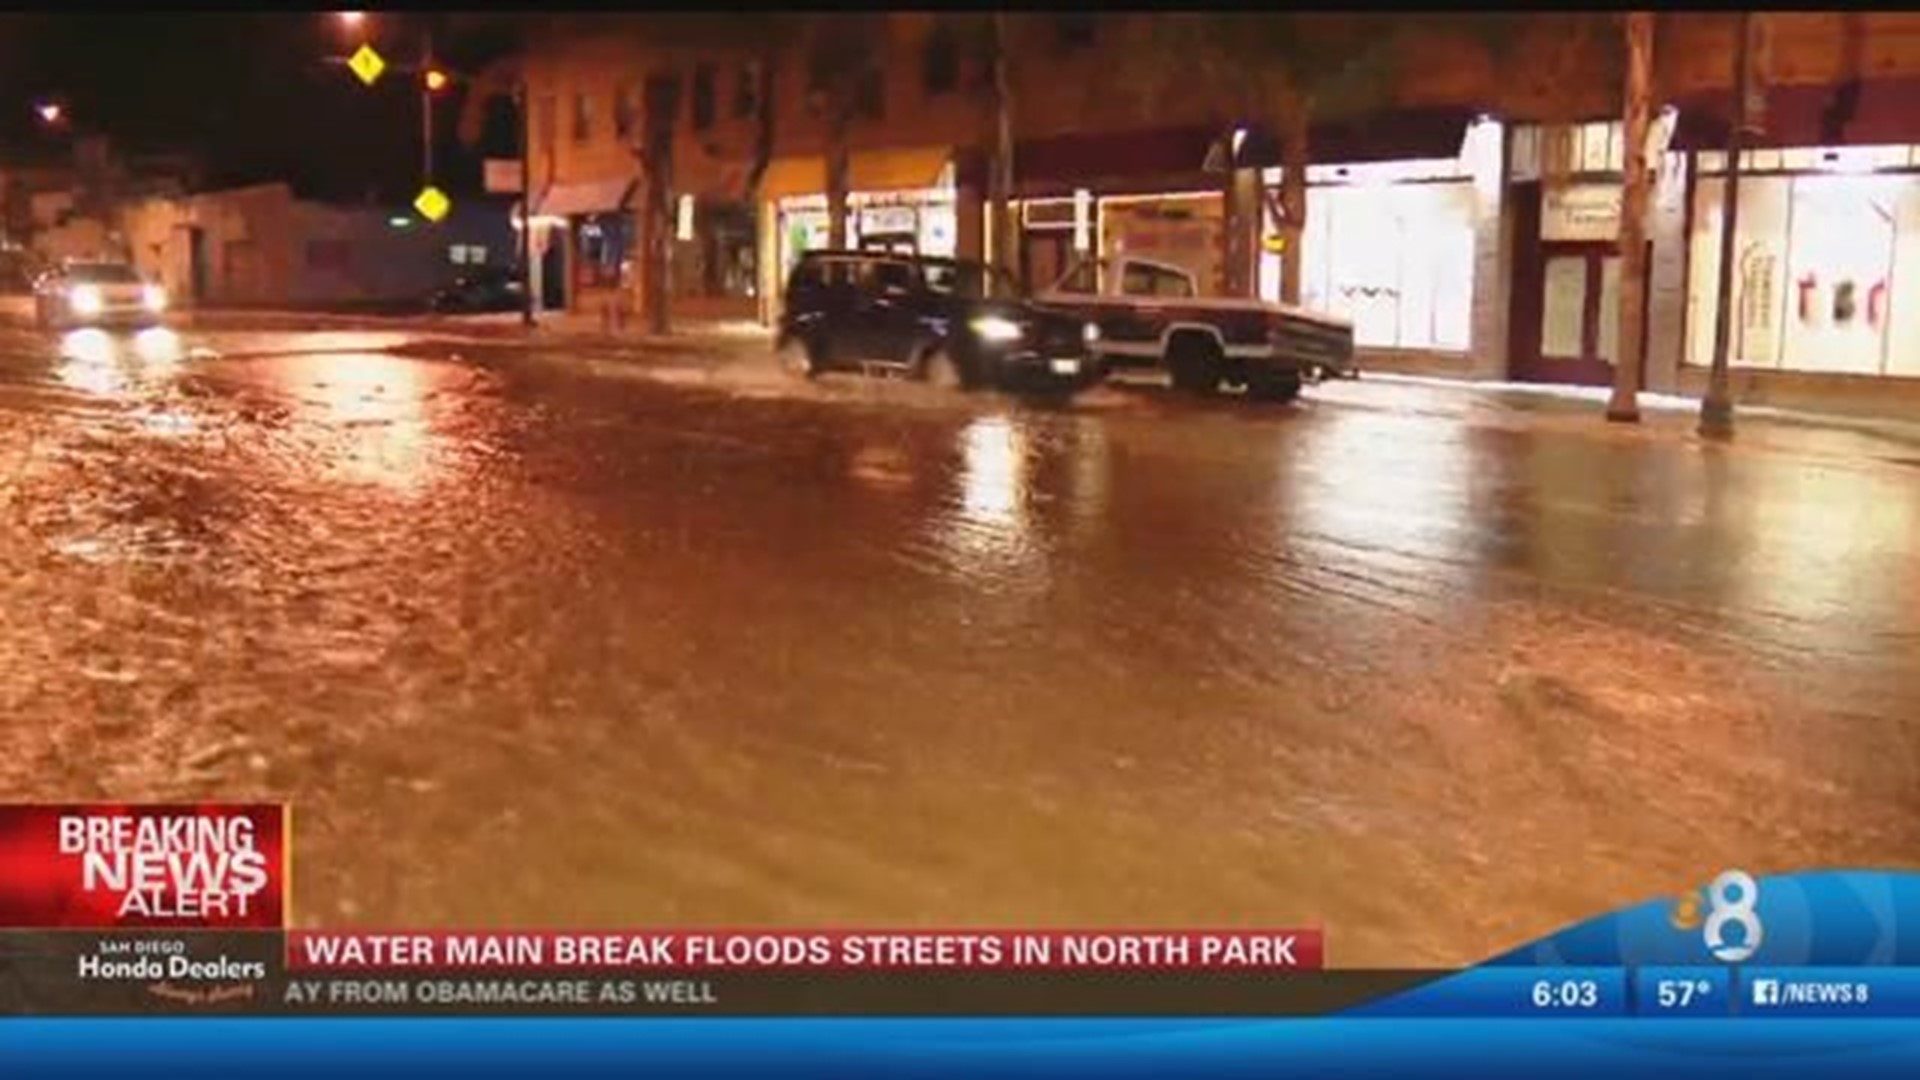 North Park Main Break: Massive flooding causes massive damage | cbs8.com